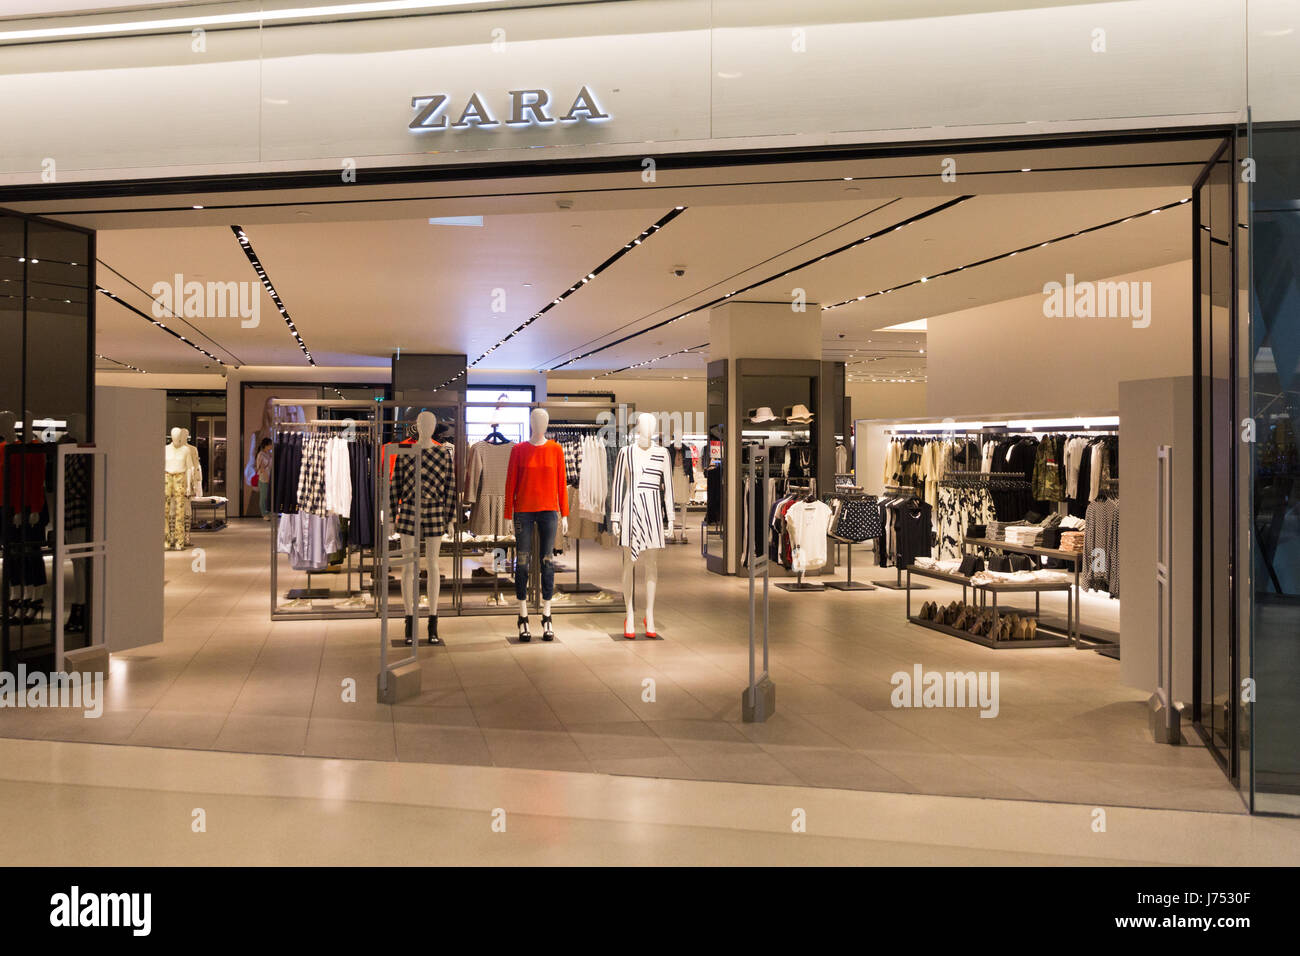 Zara store in the Embassy Mall, Bangkok, Thailand Stock Photo - Alamy